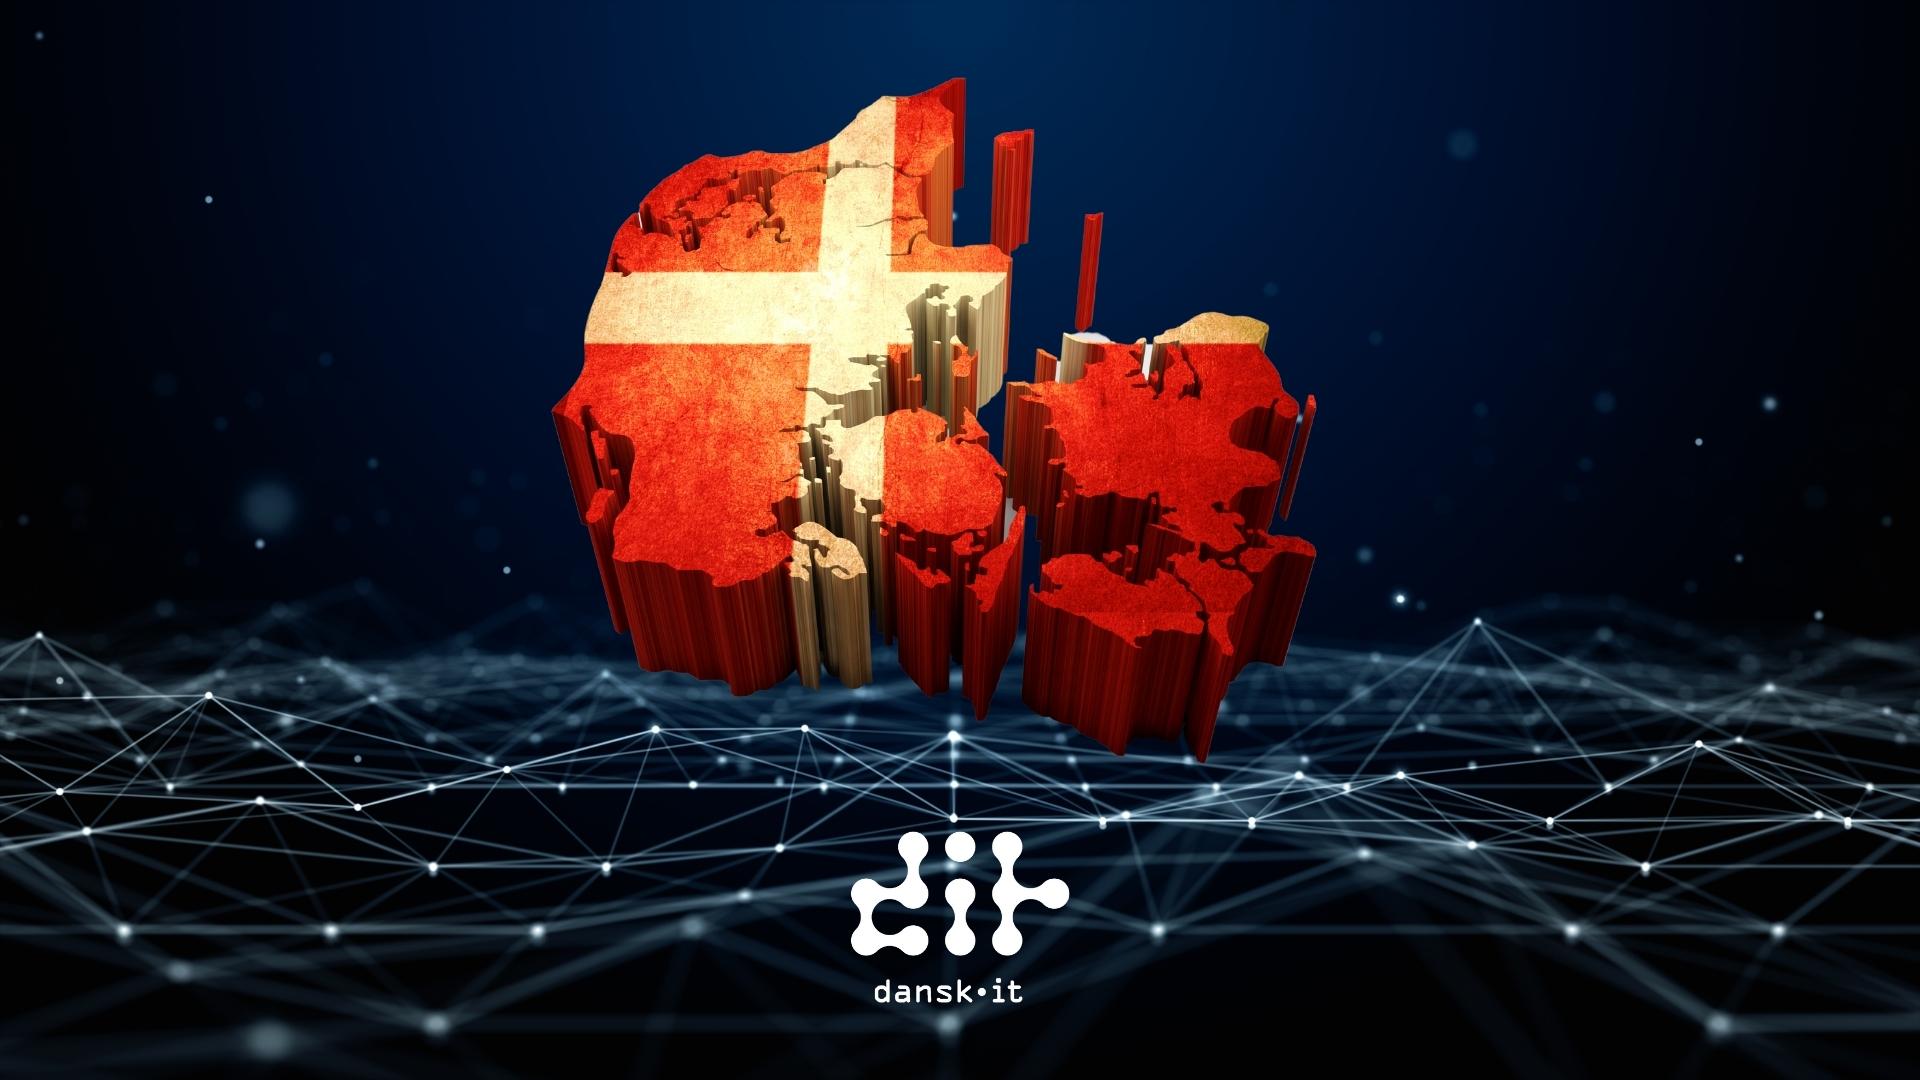 Dansk IT mener: Regeringens digitaliseringsstrategi er endelig klar - nu skal der handles